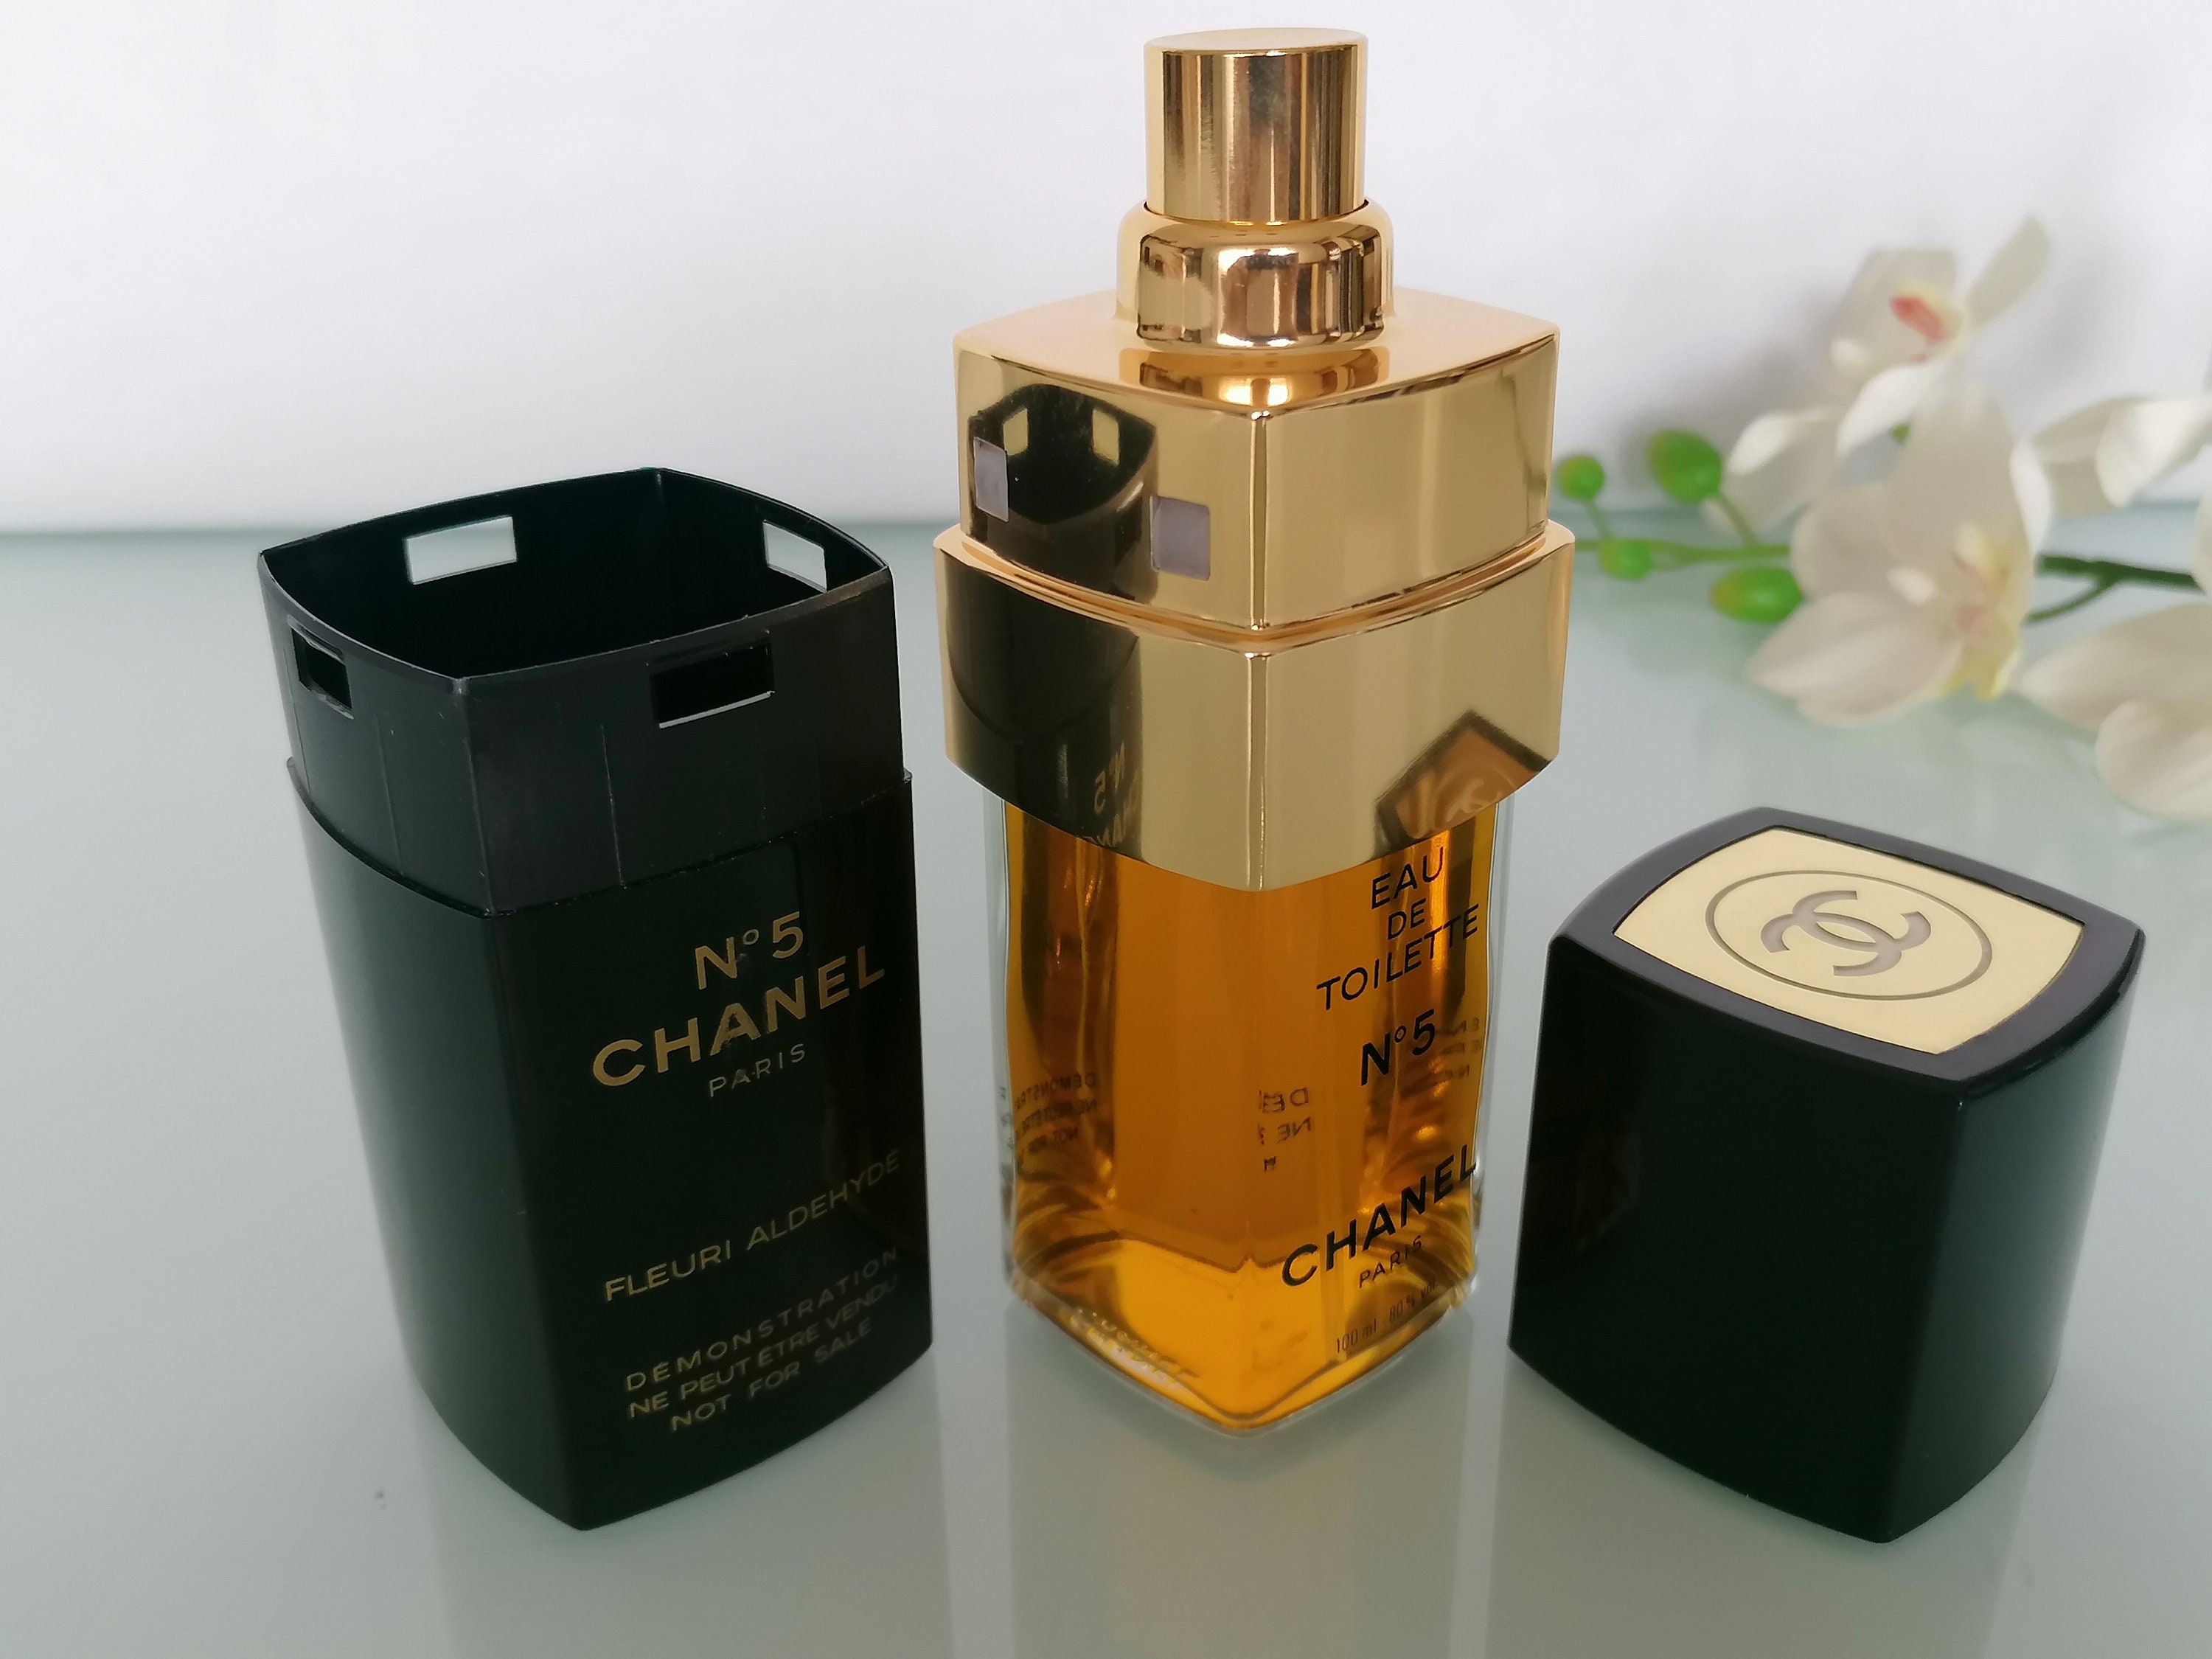 Vintage Chanel No 5 Perfume Bottle -  Israel